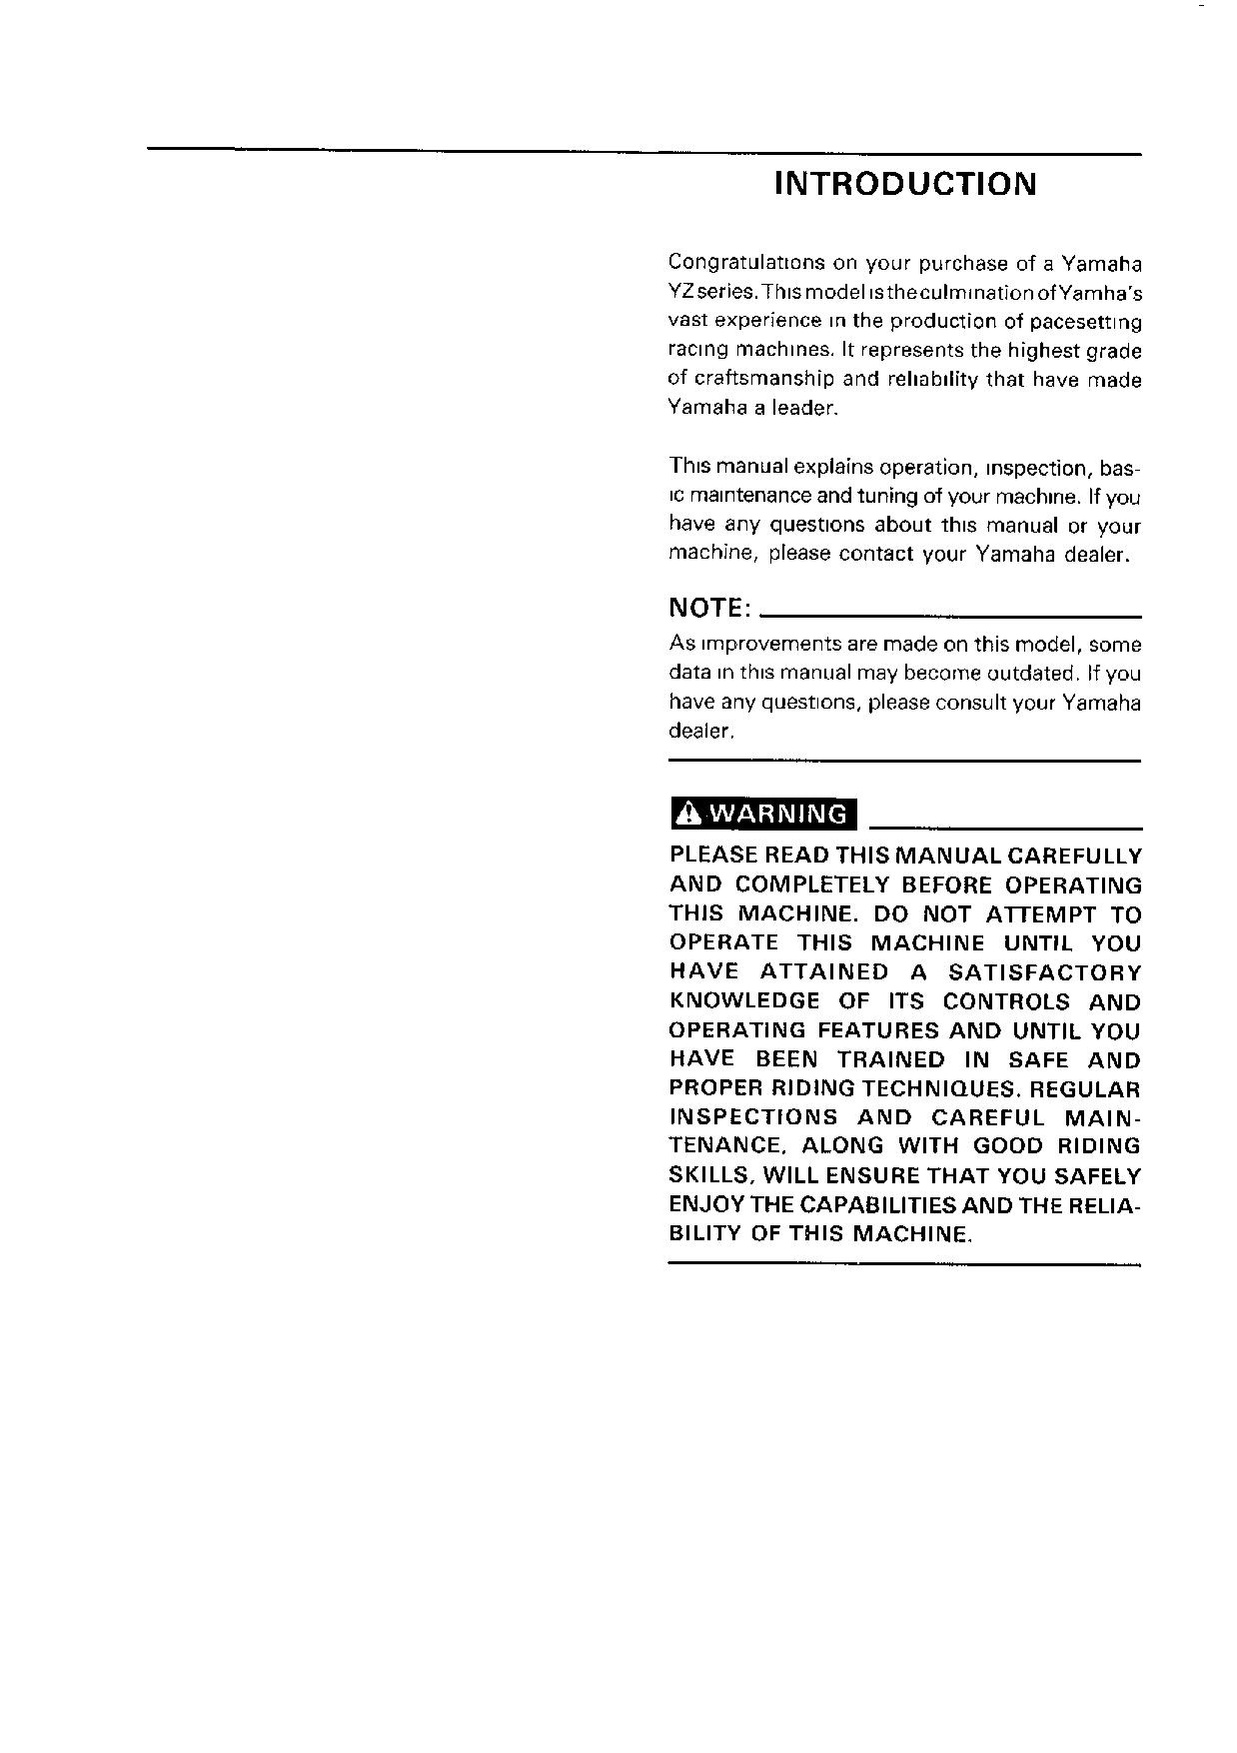 File:1994 Yamaha YZ80 (F) LC Owners Service Manaul.pdf